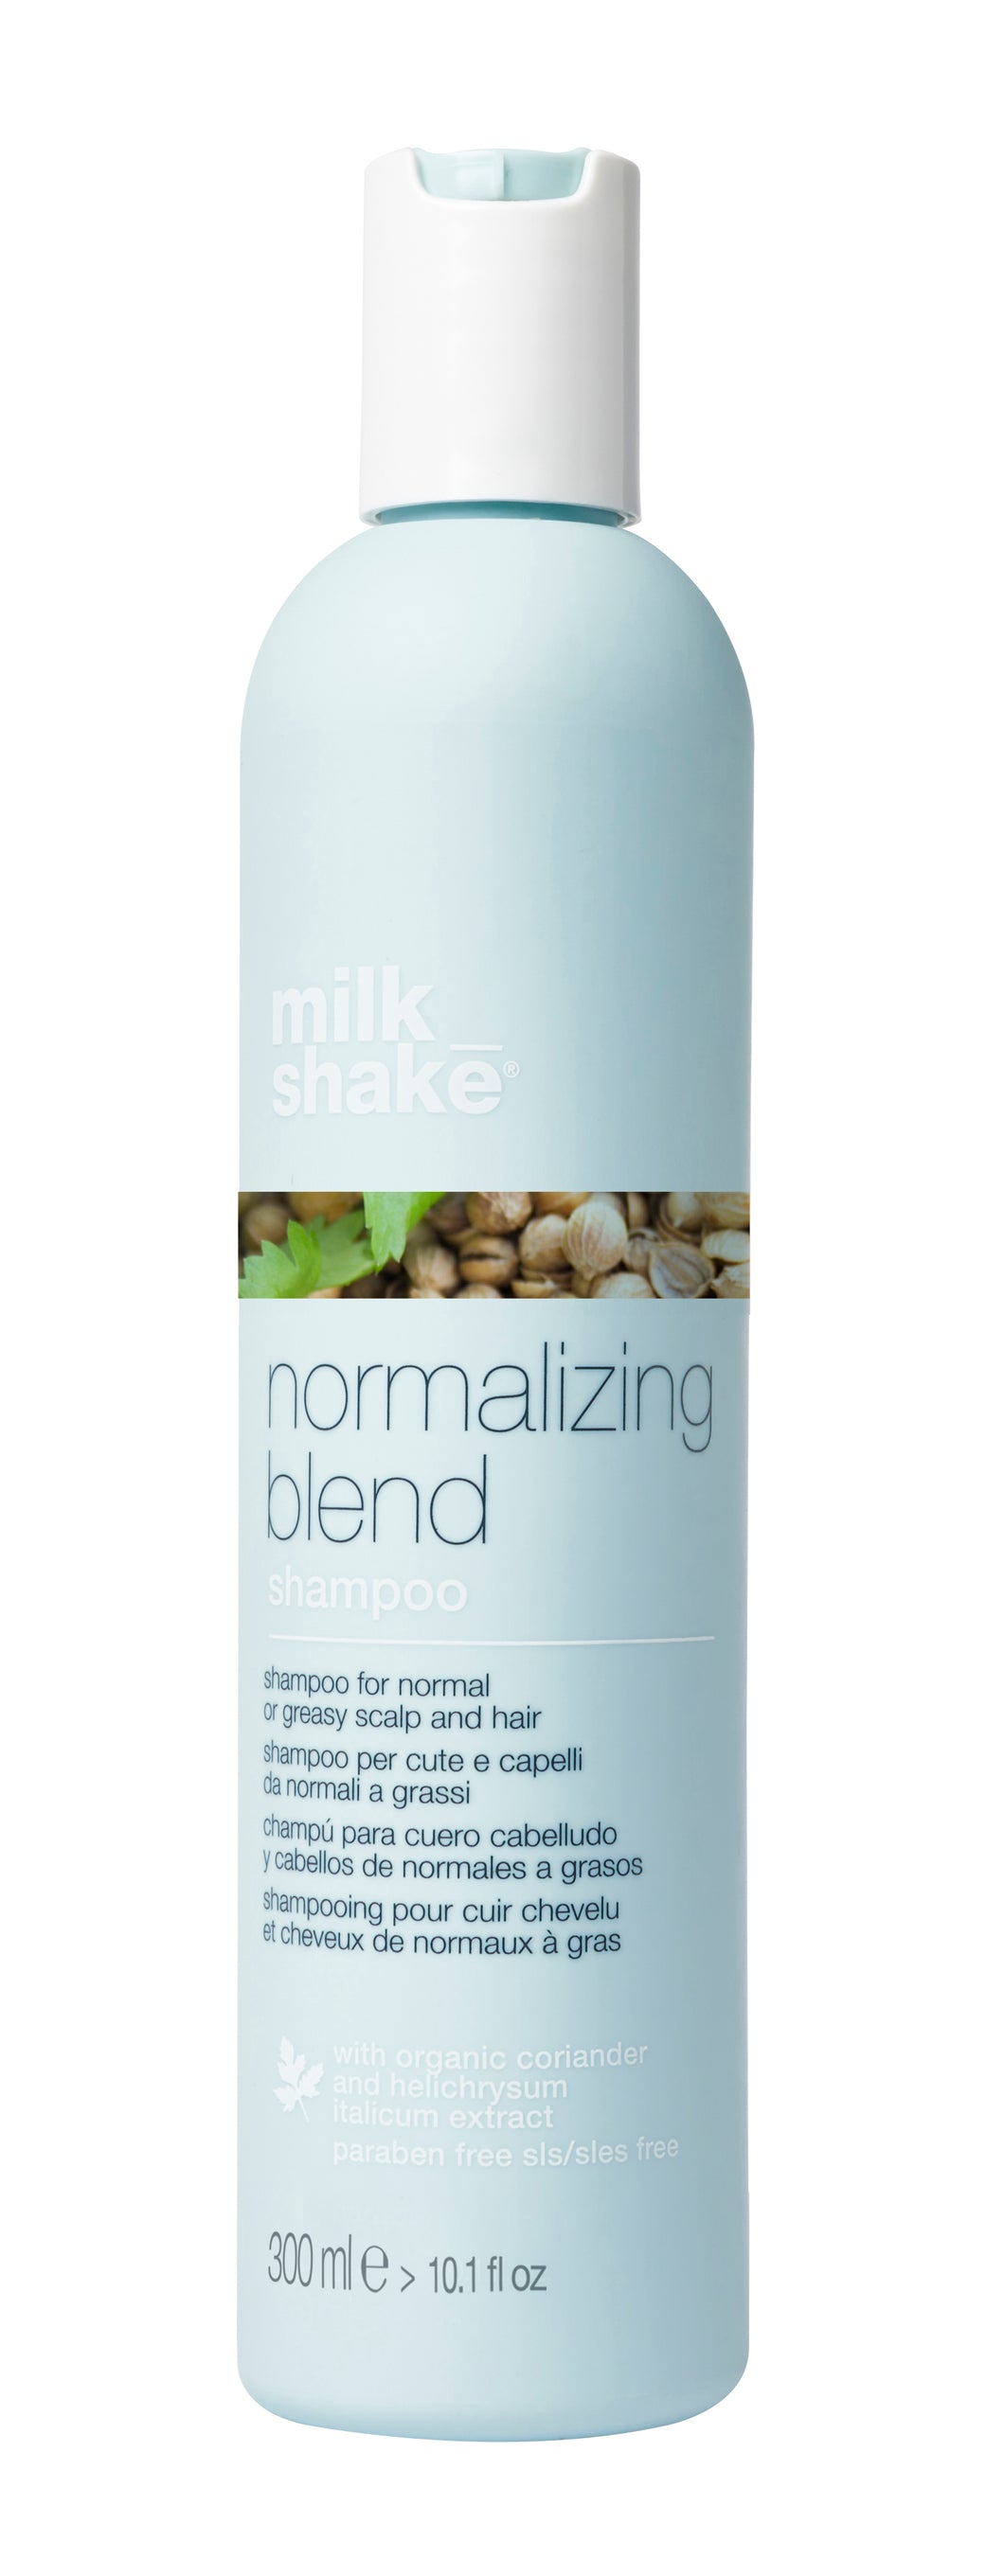 milk_shake normalizing blend shampoo 300ml